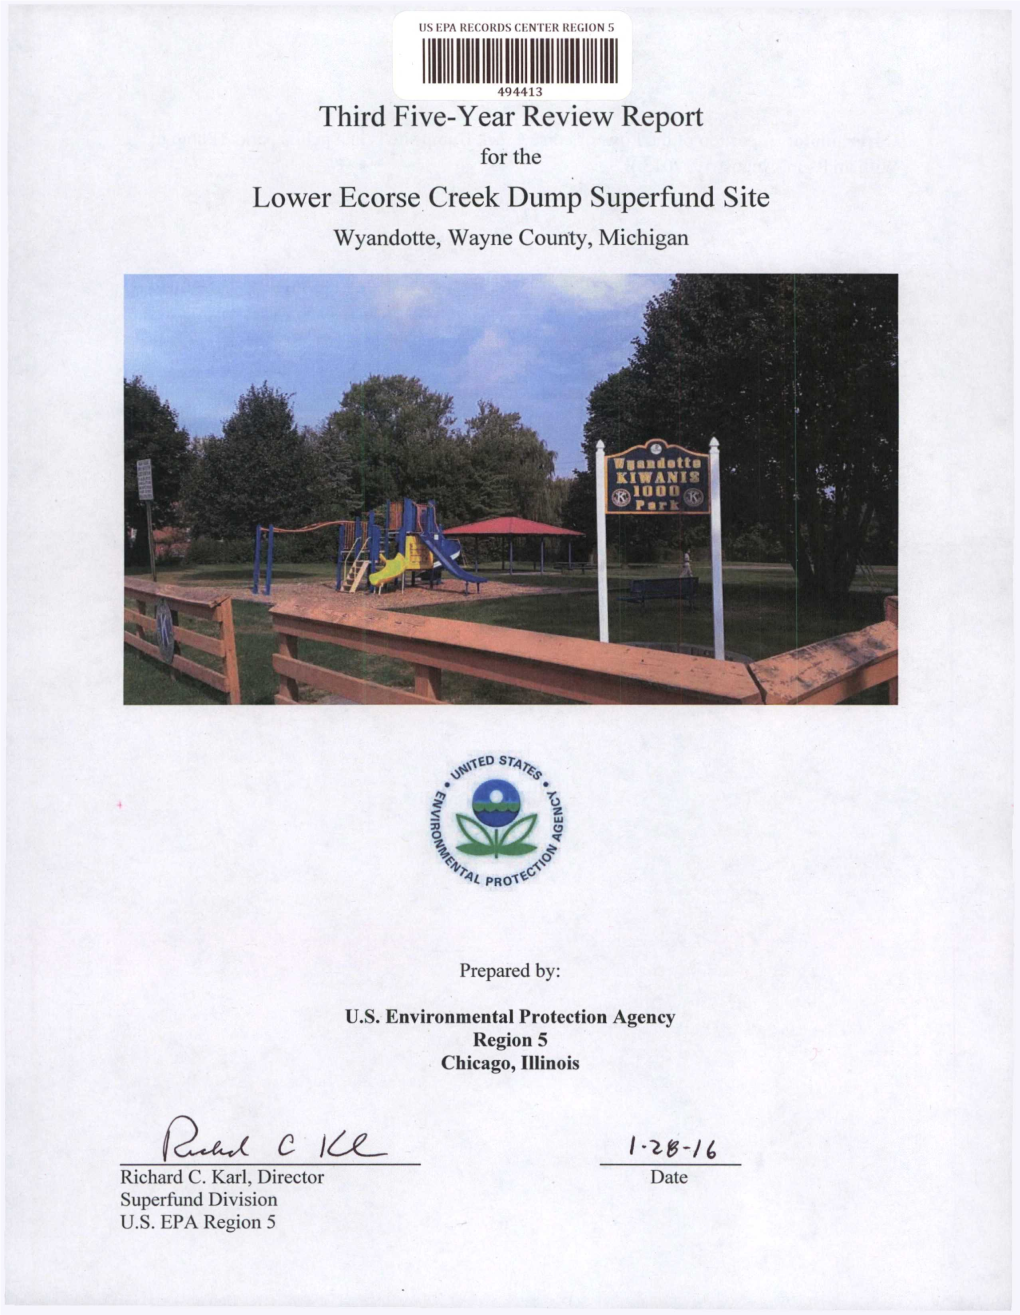 Lower Ecorse Creek Dump Site Is in a Public Park